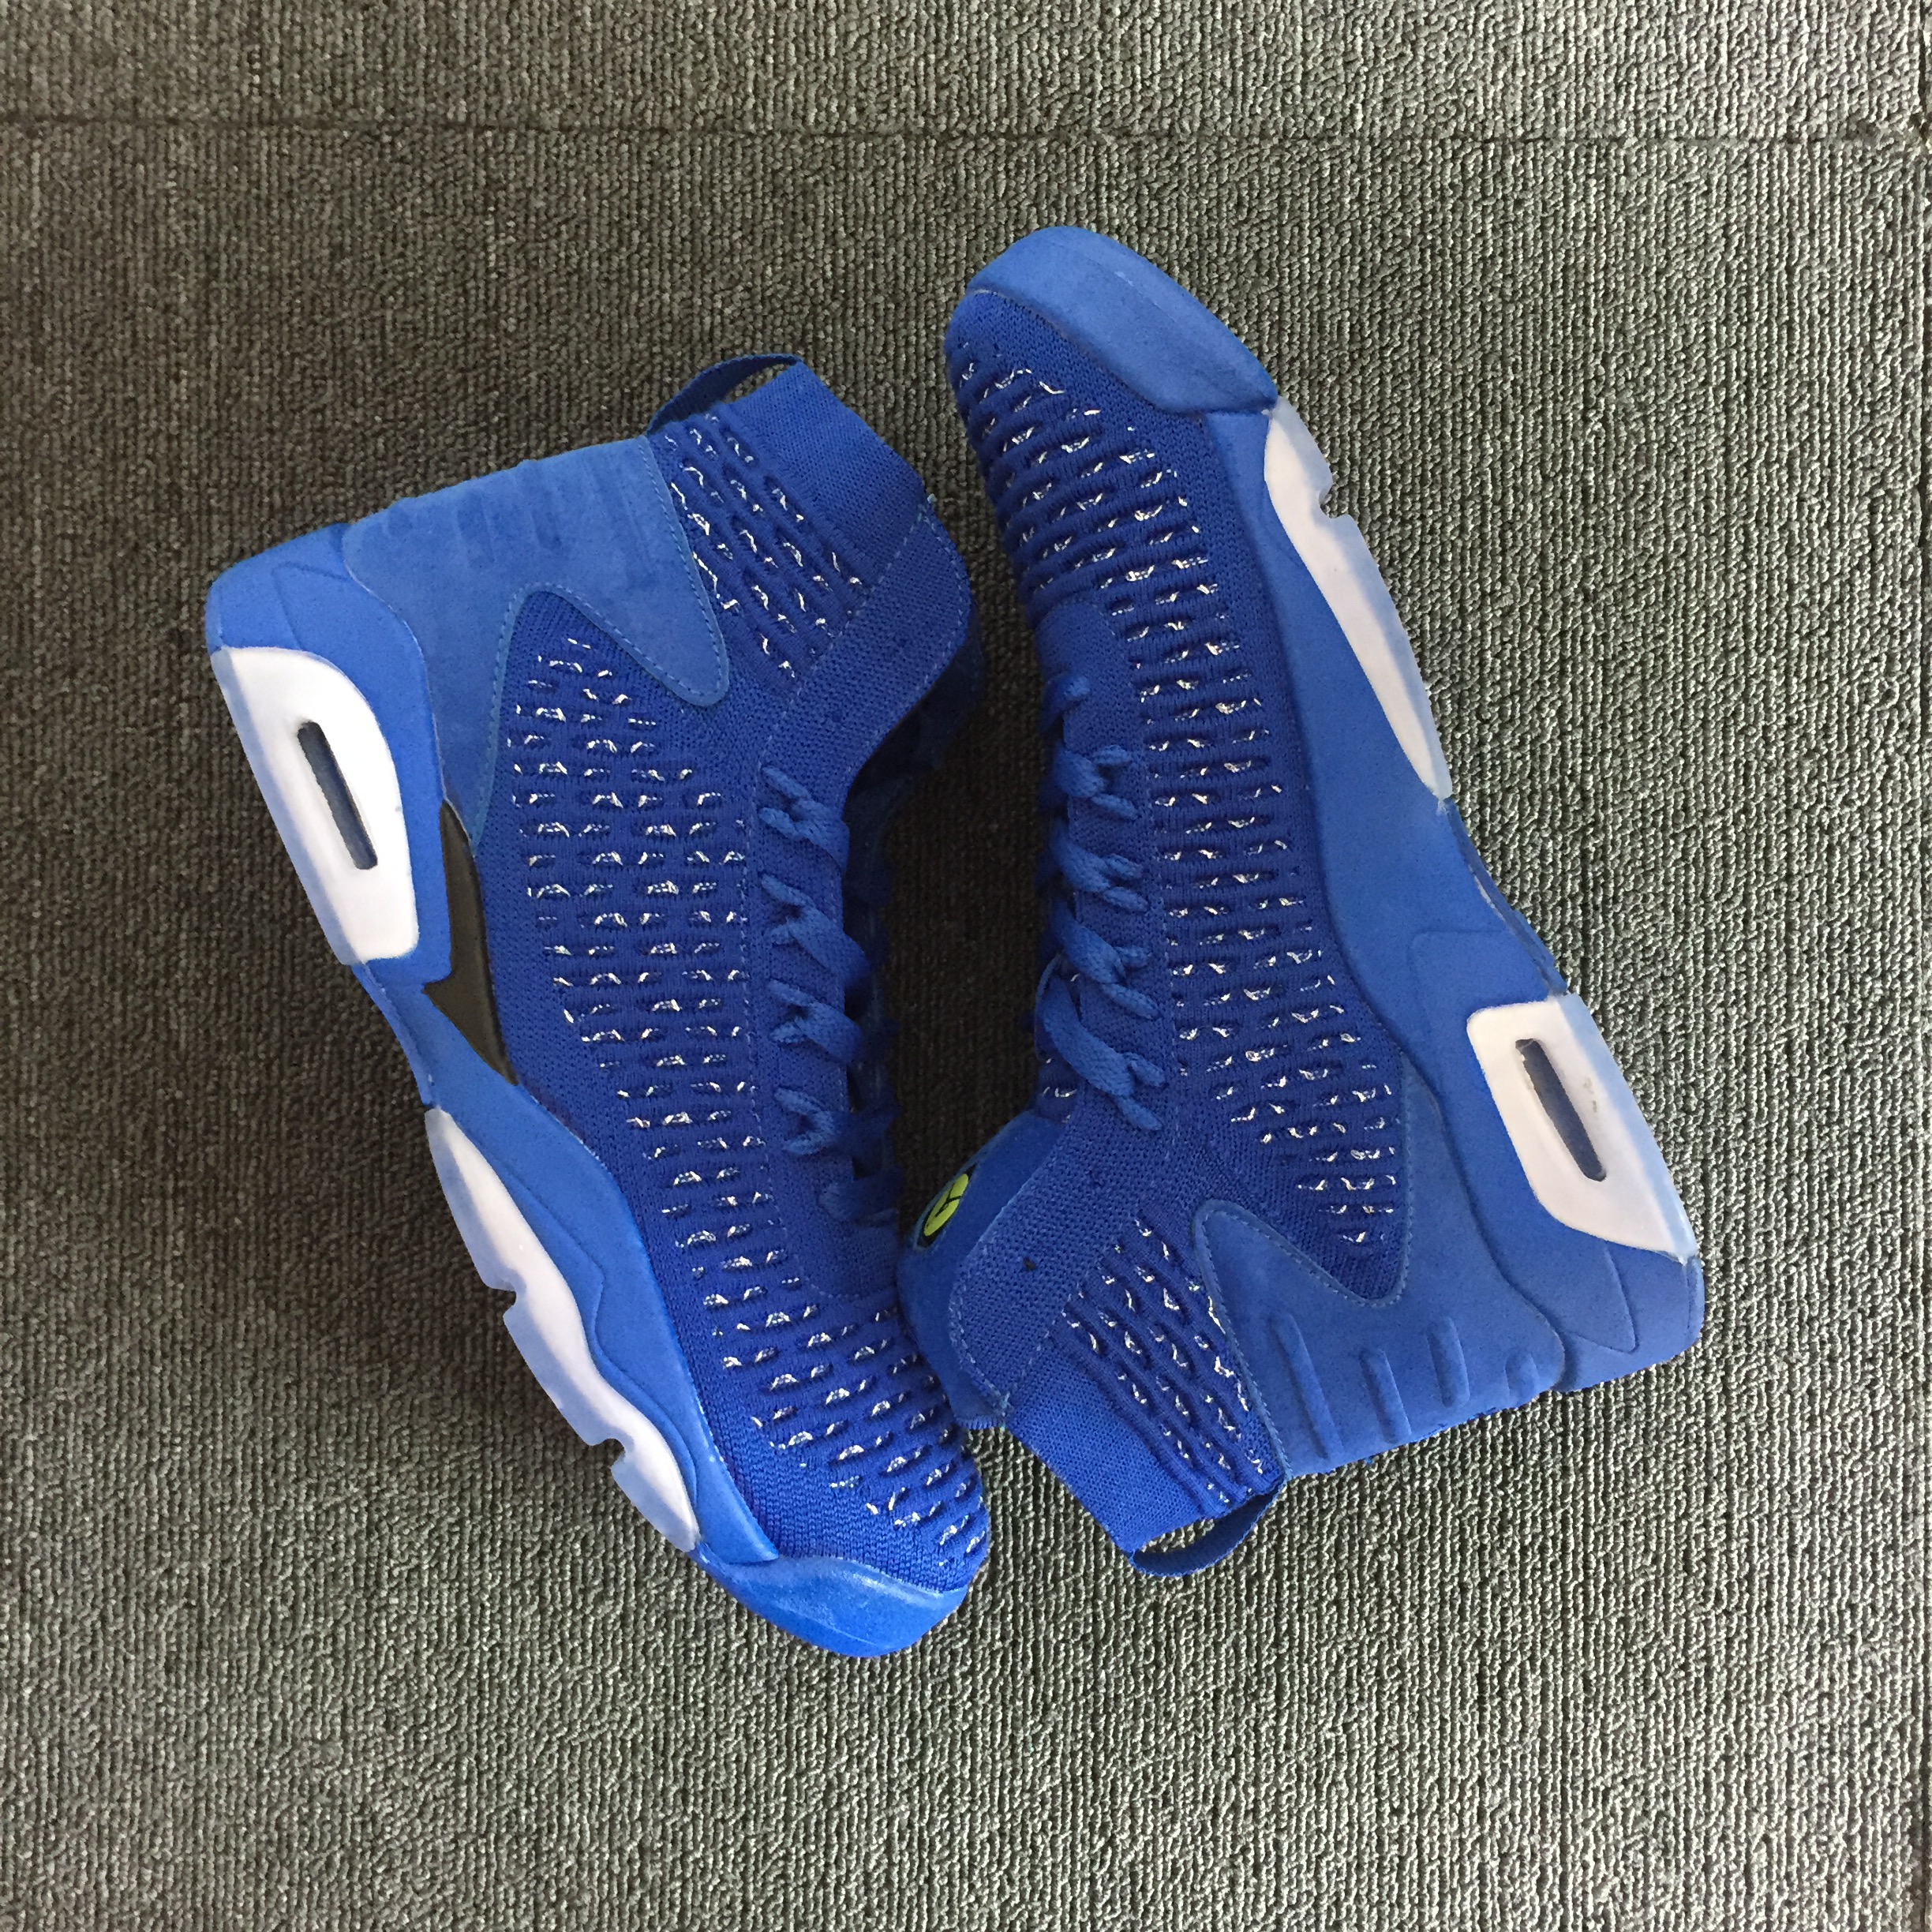 Air Jordan 6 FlyKnit All Blue Shoes